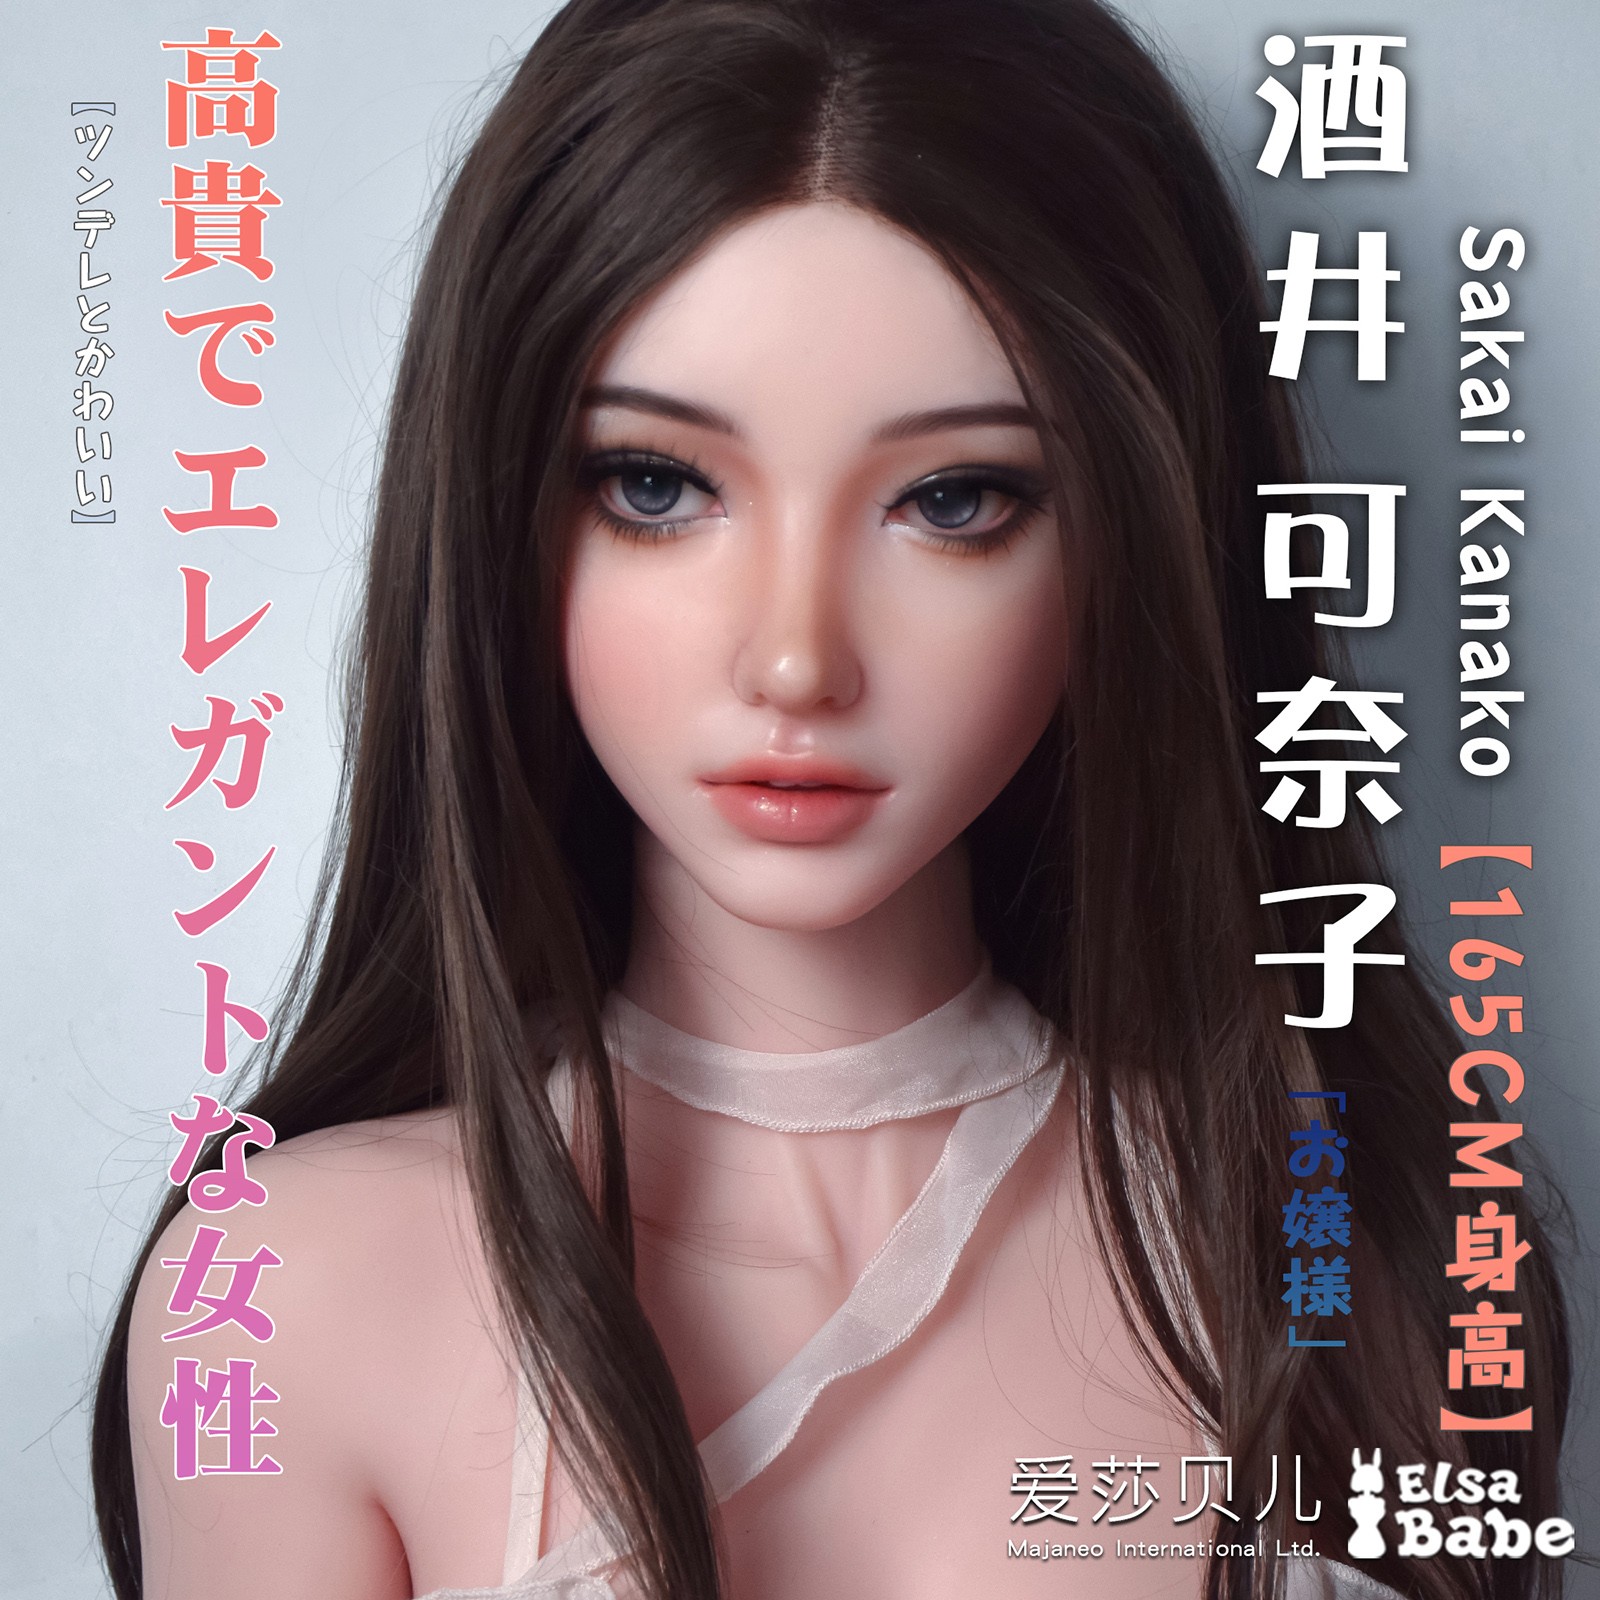 ElsaBabe Head of 160cm/165cm Platinum Silicone Sex Doll, Sakai Kanako